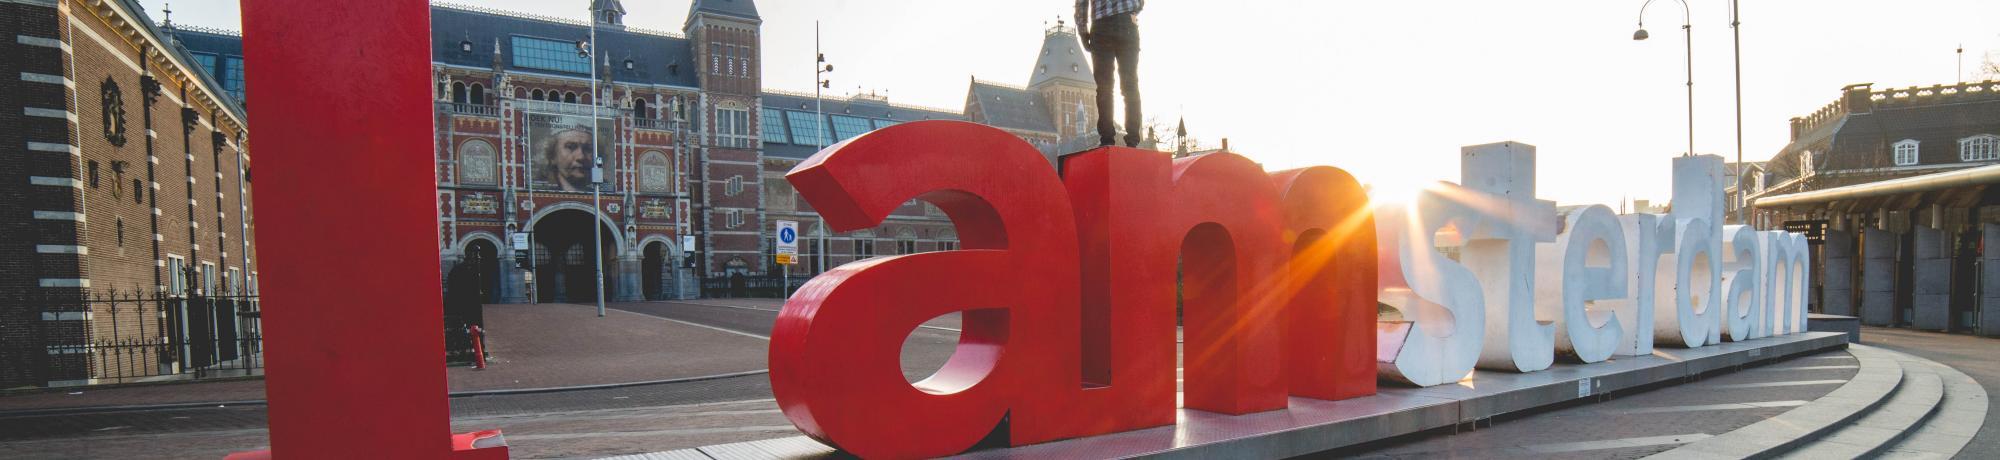 "I Am Amsterdam" sculpture